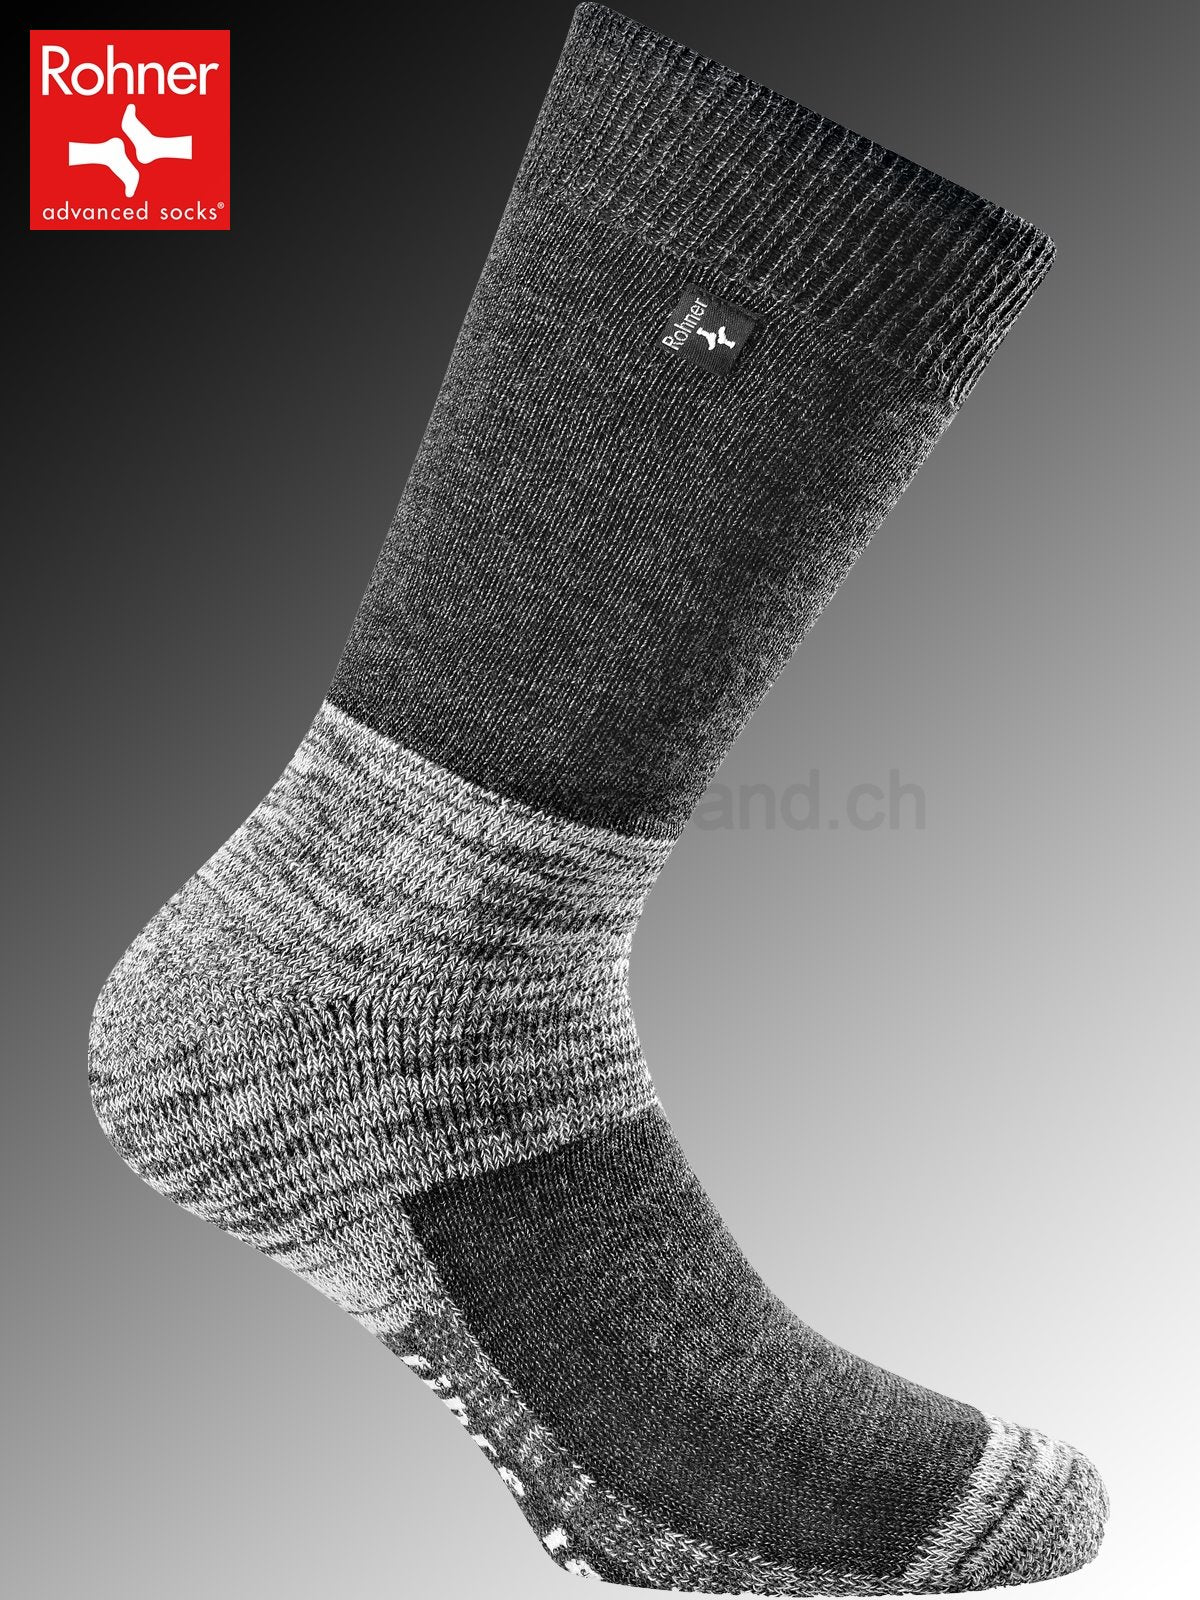 Fibre Tech Trekking Socks